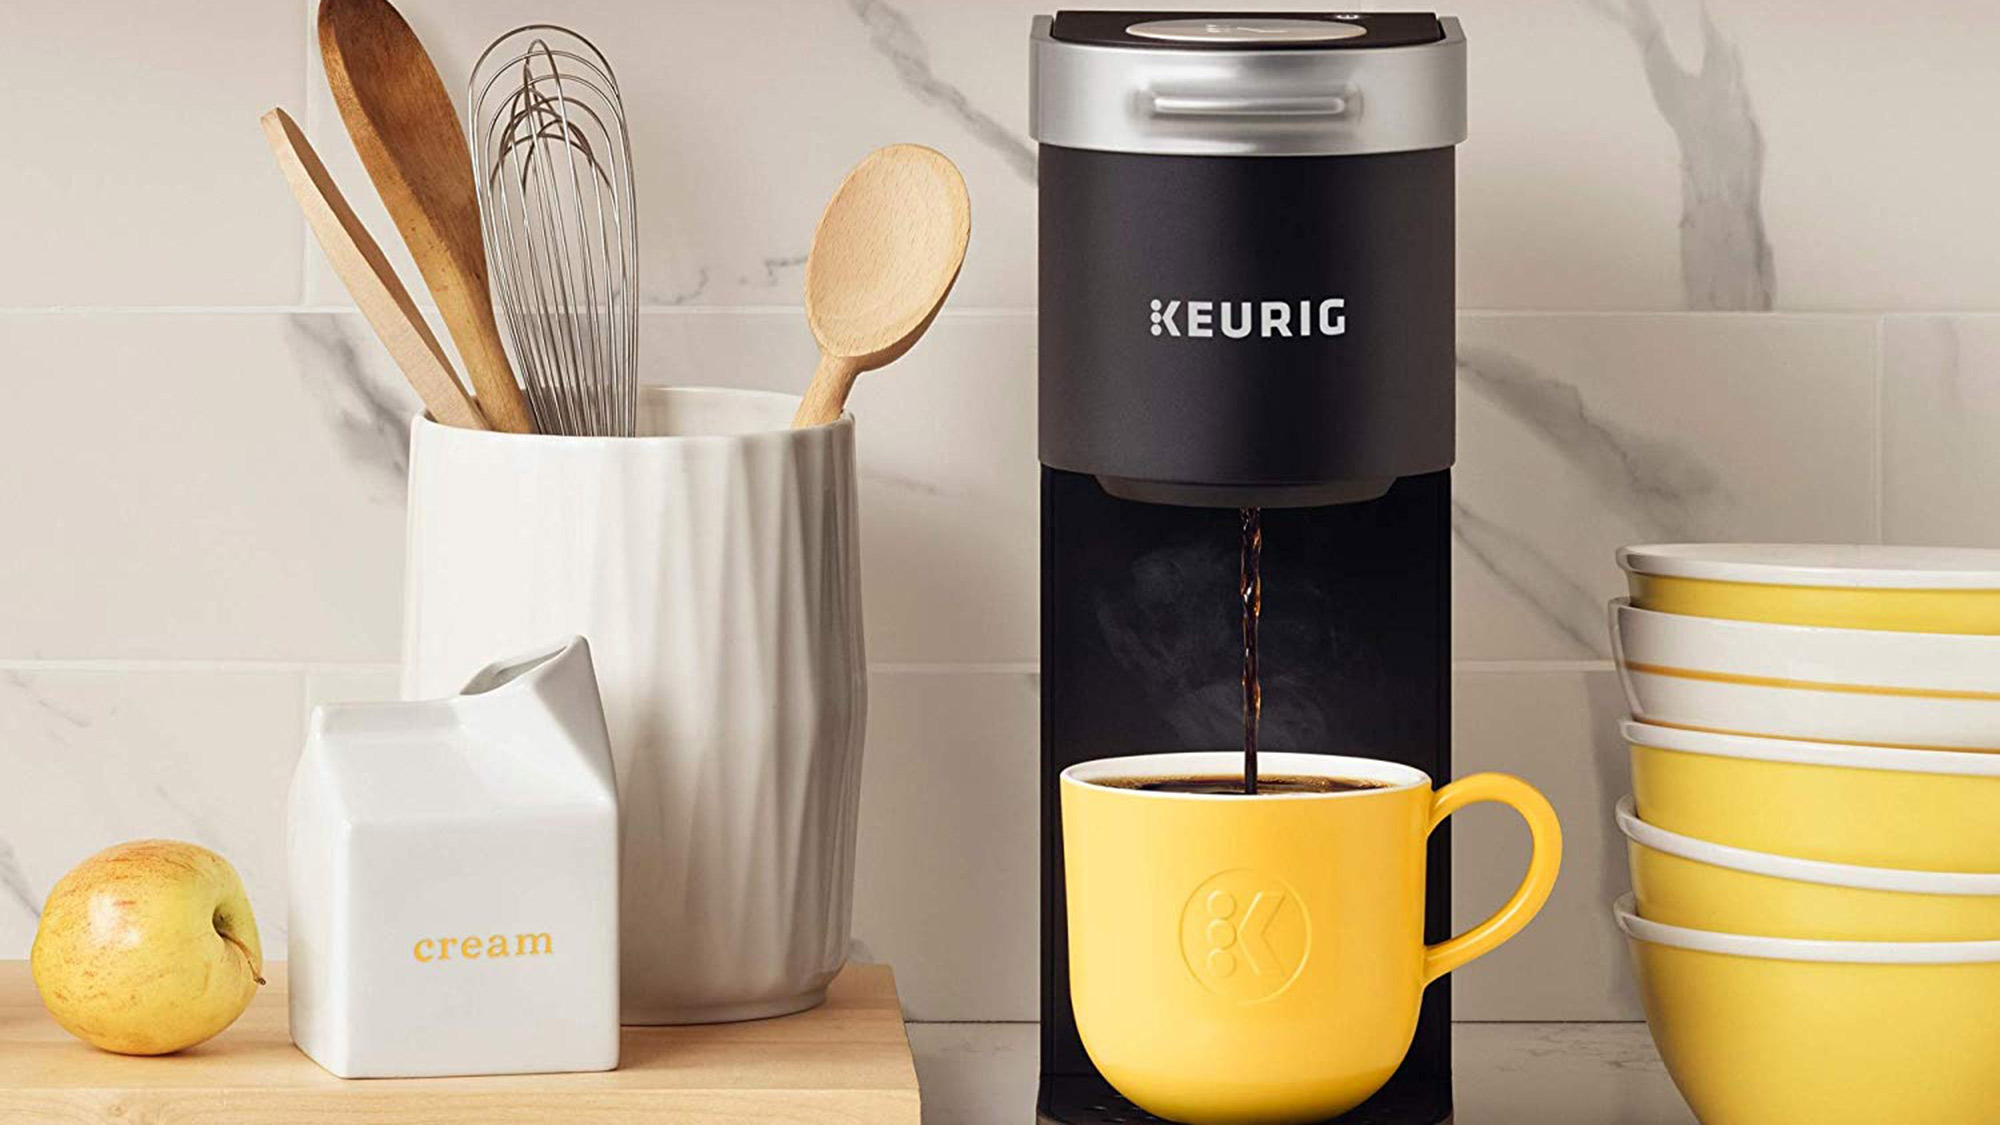 Steps to Descaling Keurig Coffee Maker using Citric Acid